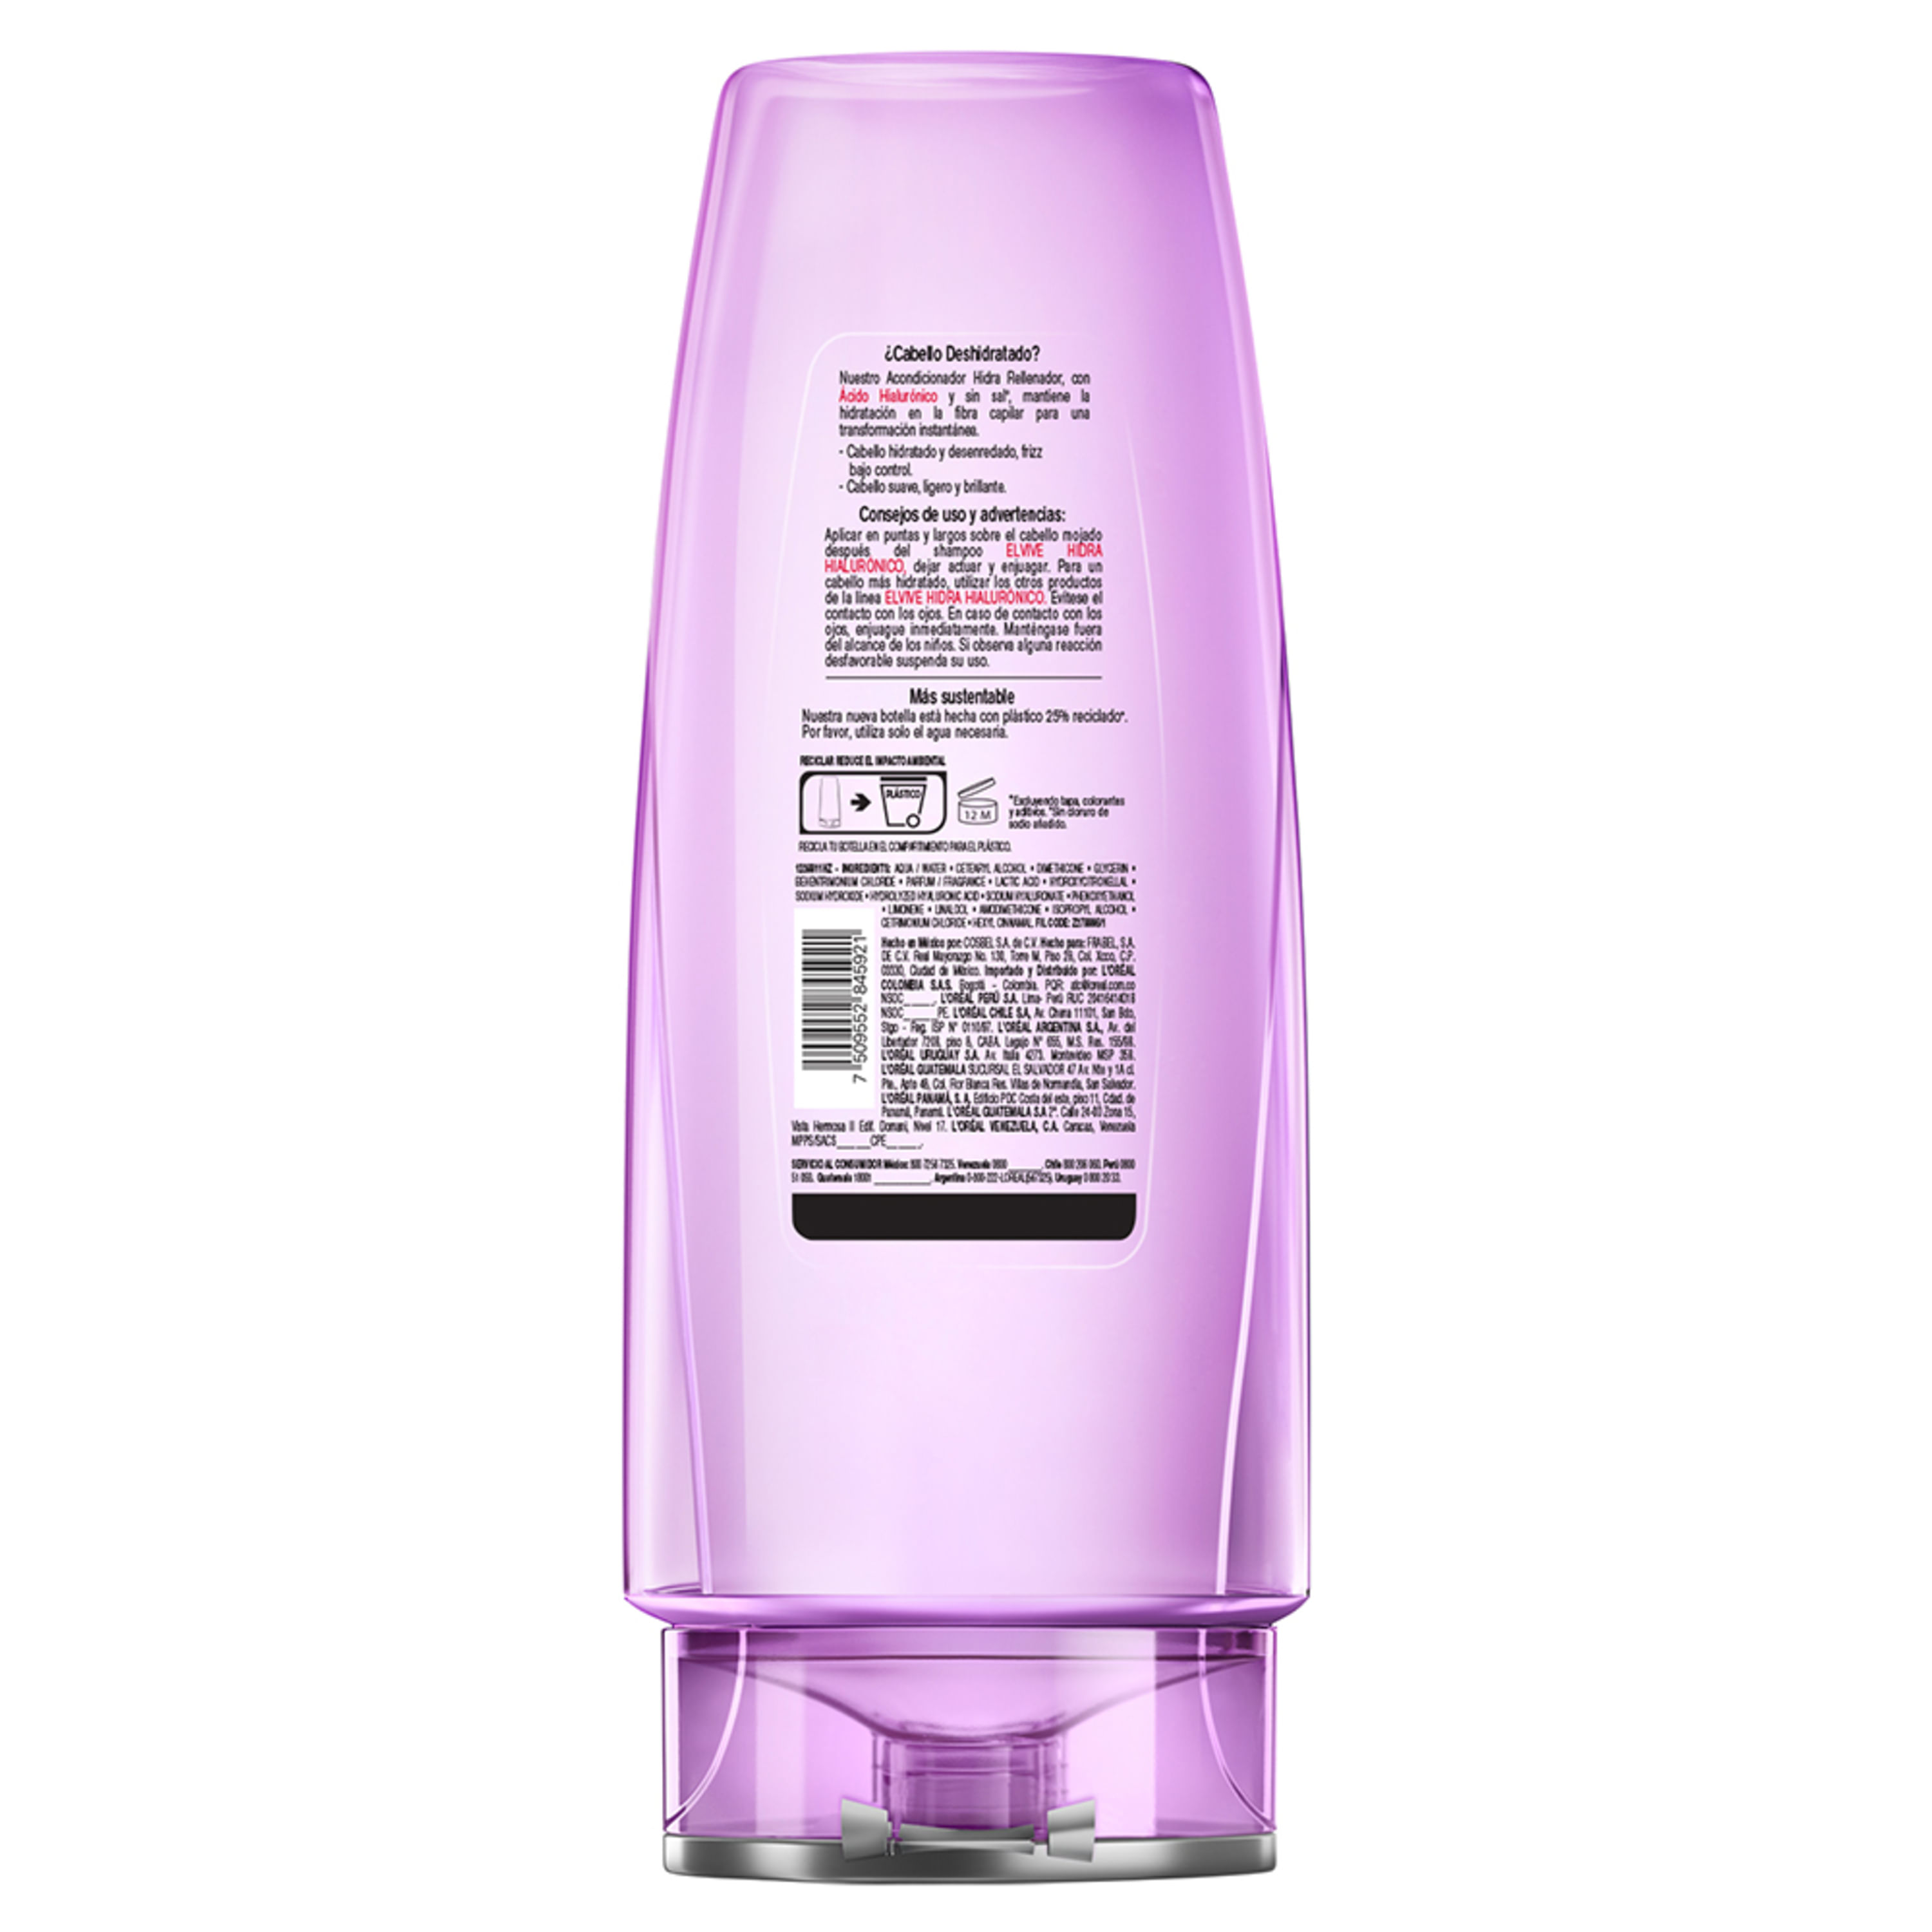 Shampoo L'Oréal Elvive hidra hialurónico cabello deshidratado 680 ml